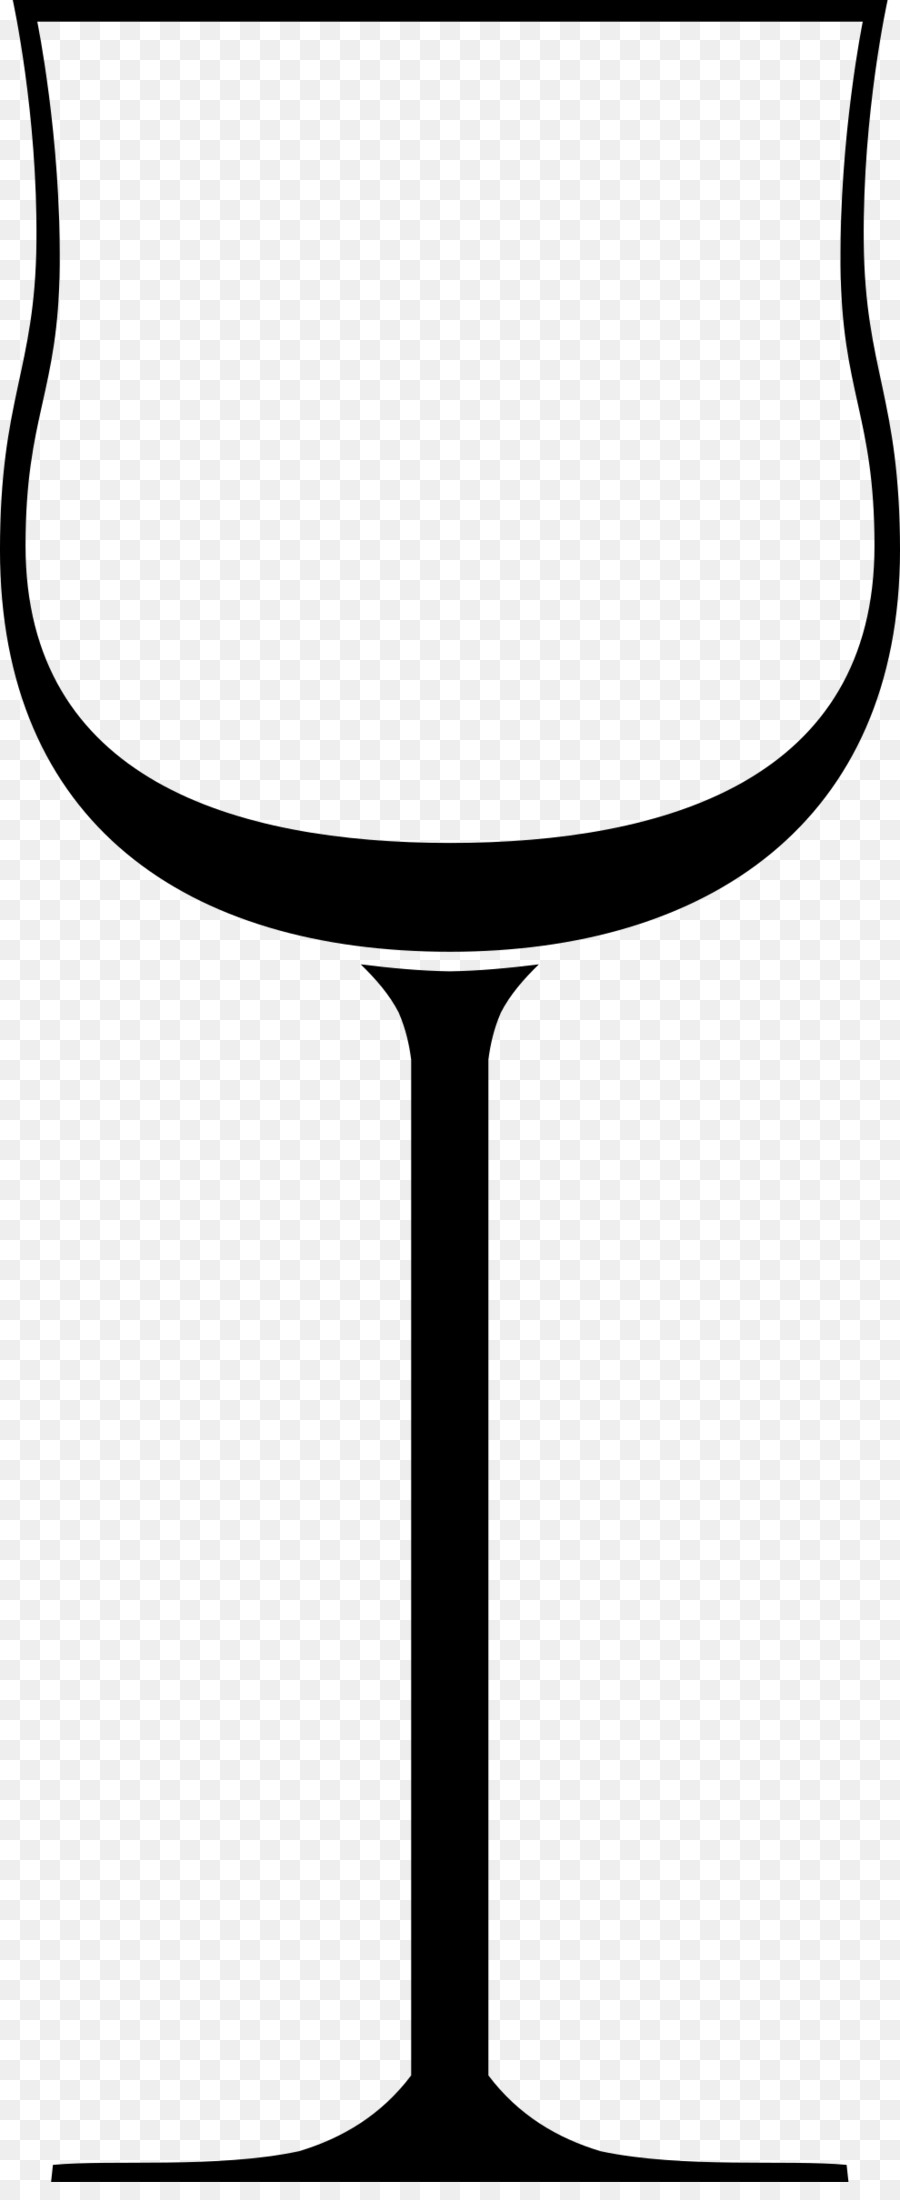 White wine Wine glass Clip art - Wineglass png download - 990*2400 - Free Transparent White Wine png Download.